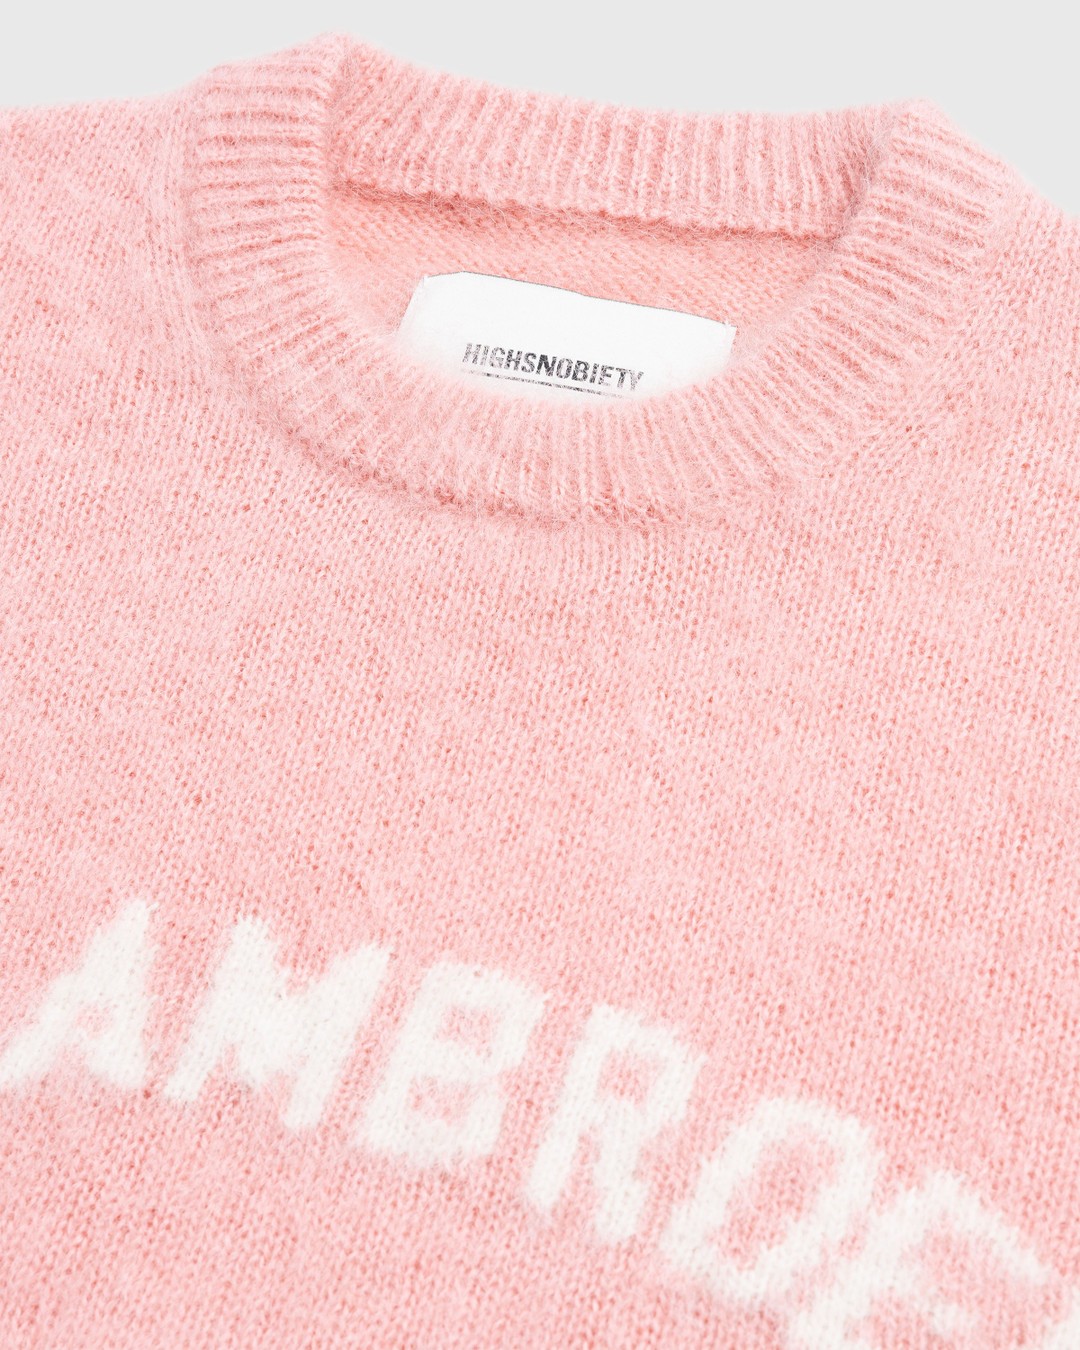 Highsnobiety x Sant Ambroeus – Knit Crewneck Pink  - Knitwear - Pink - Image 6